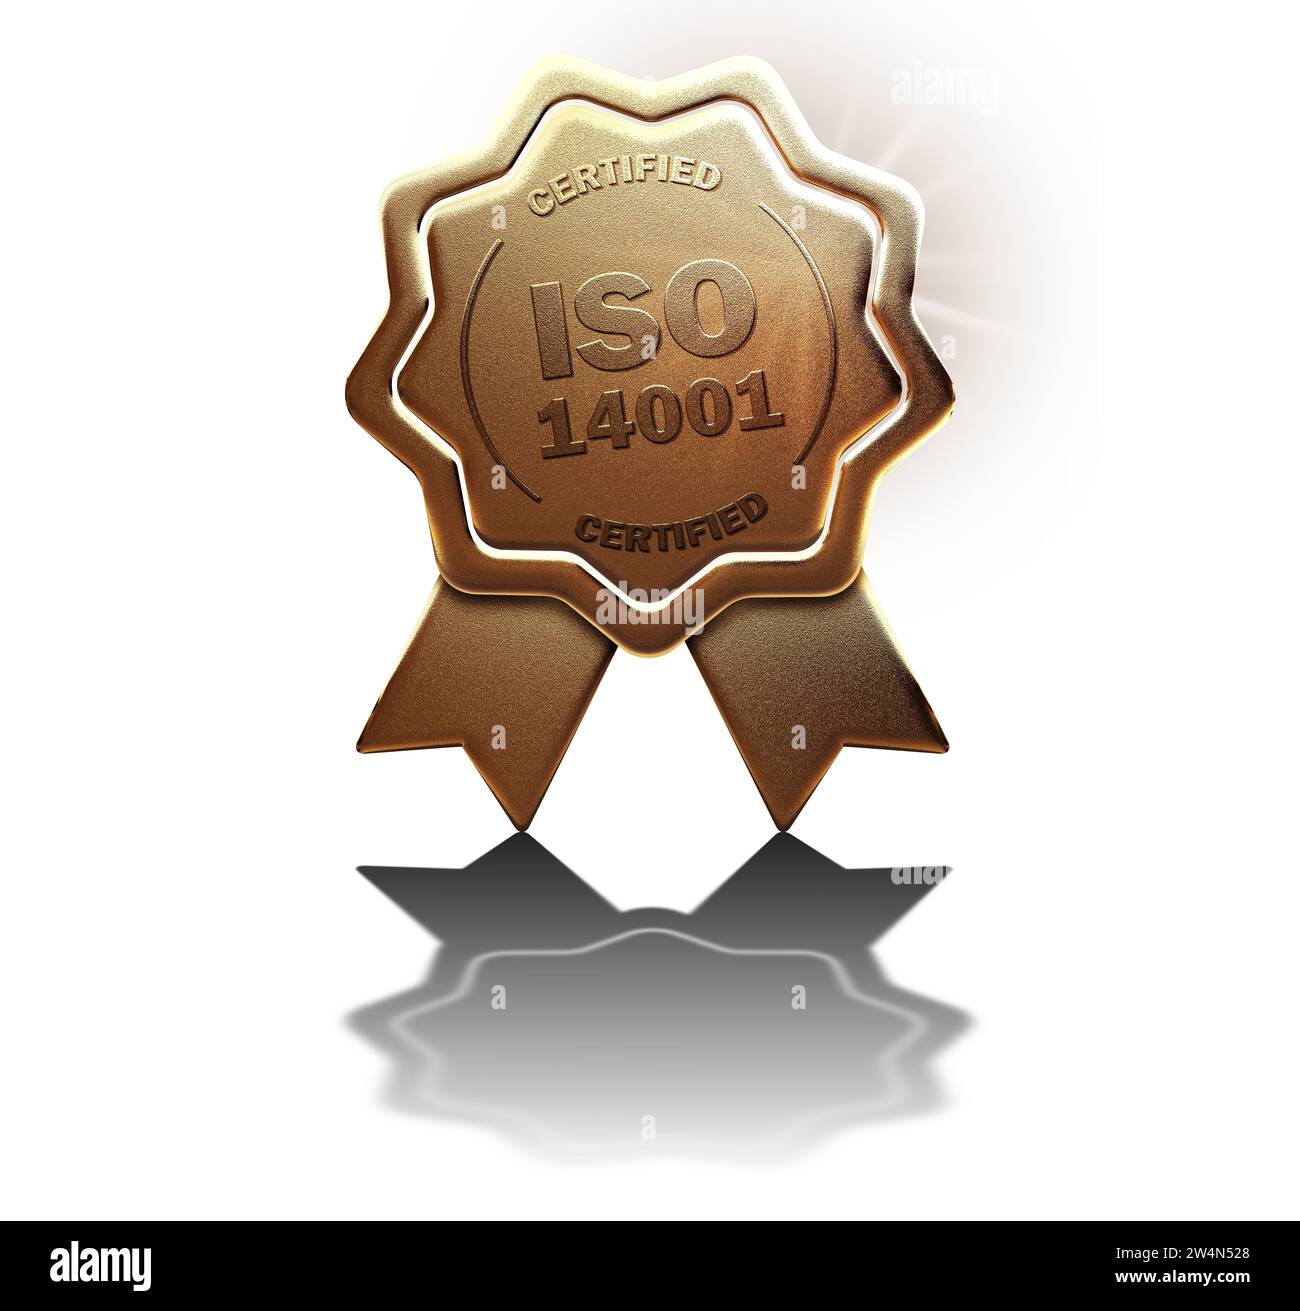 INTERNATIONALES QUALITÄTSSIEGEL ISO 14001 Stockfoto